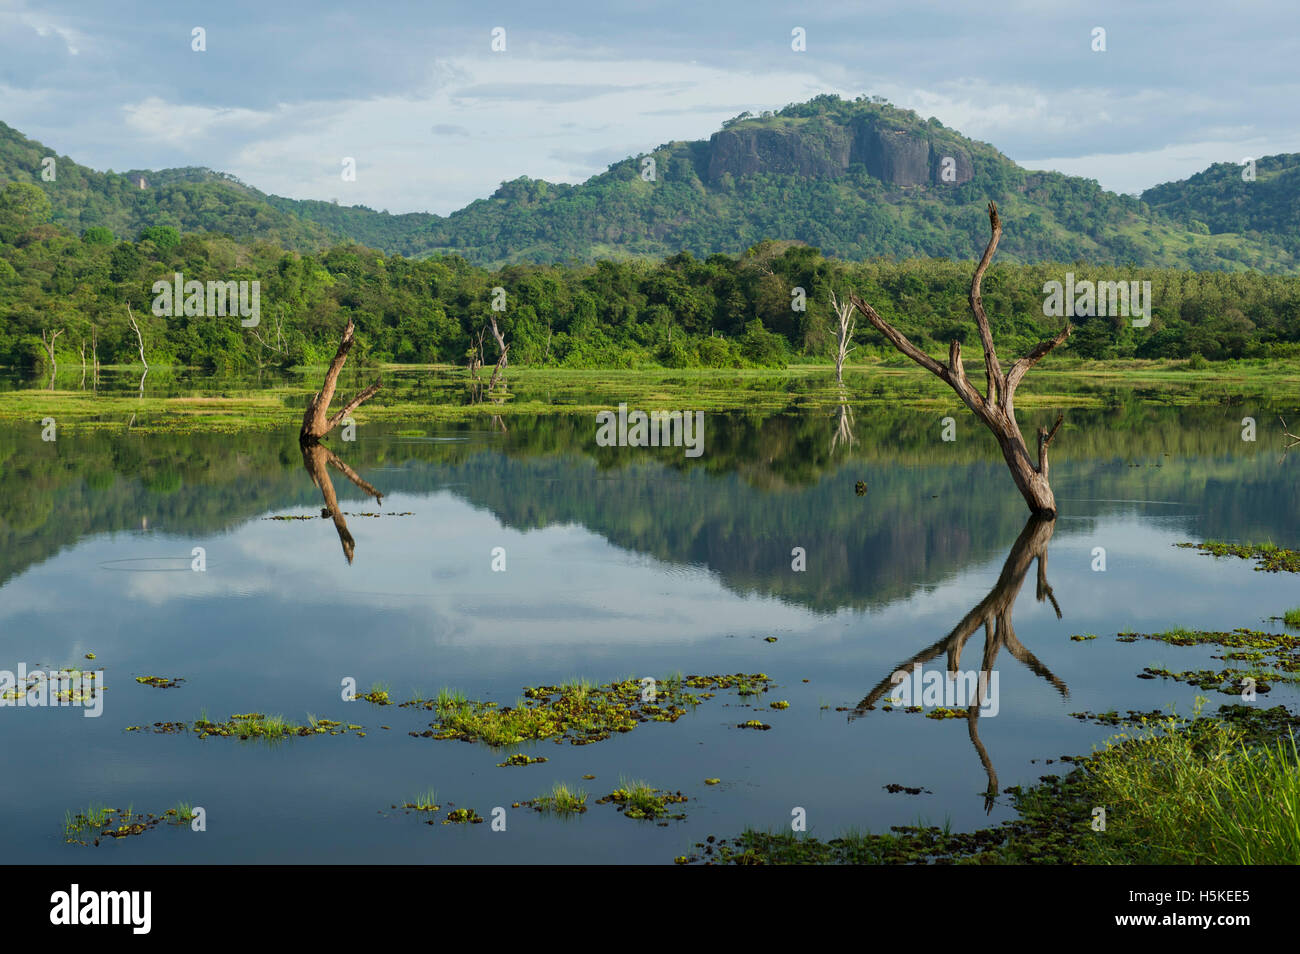 Lake in mountain scenery, Gal Oya National Park, Sri Lanka Stock Photo -  Alamy